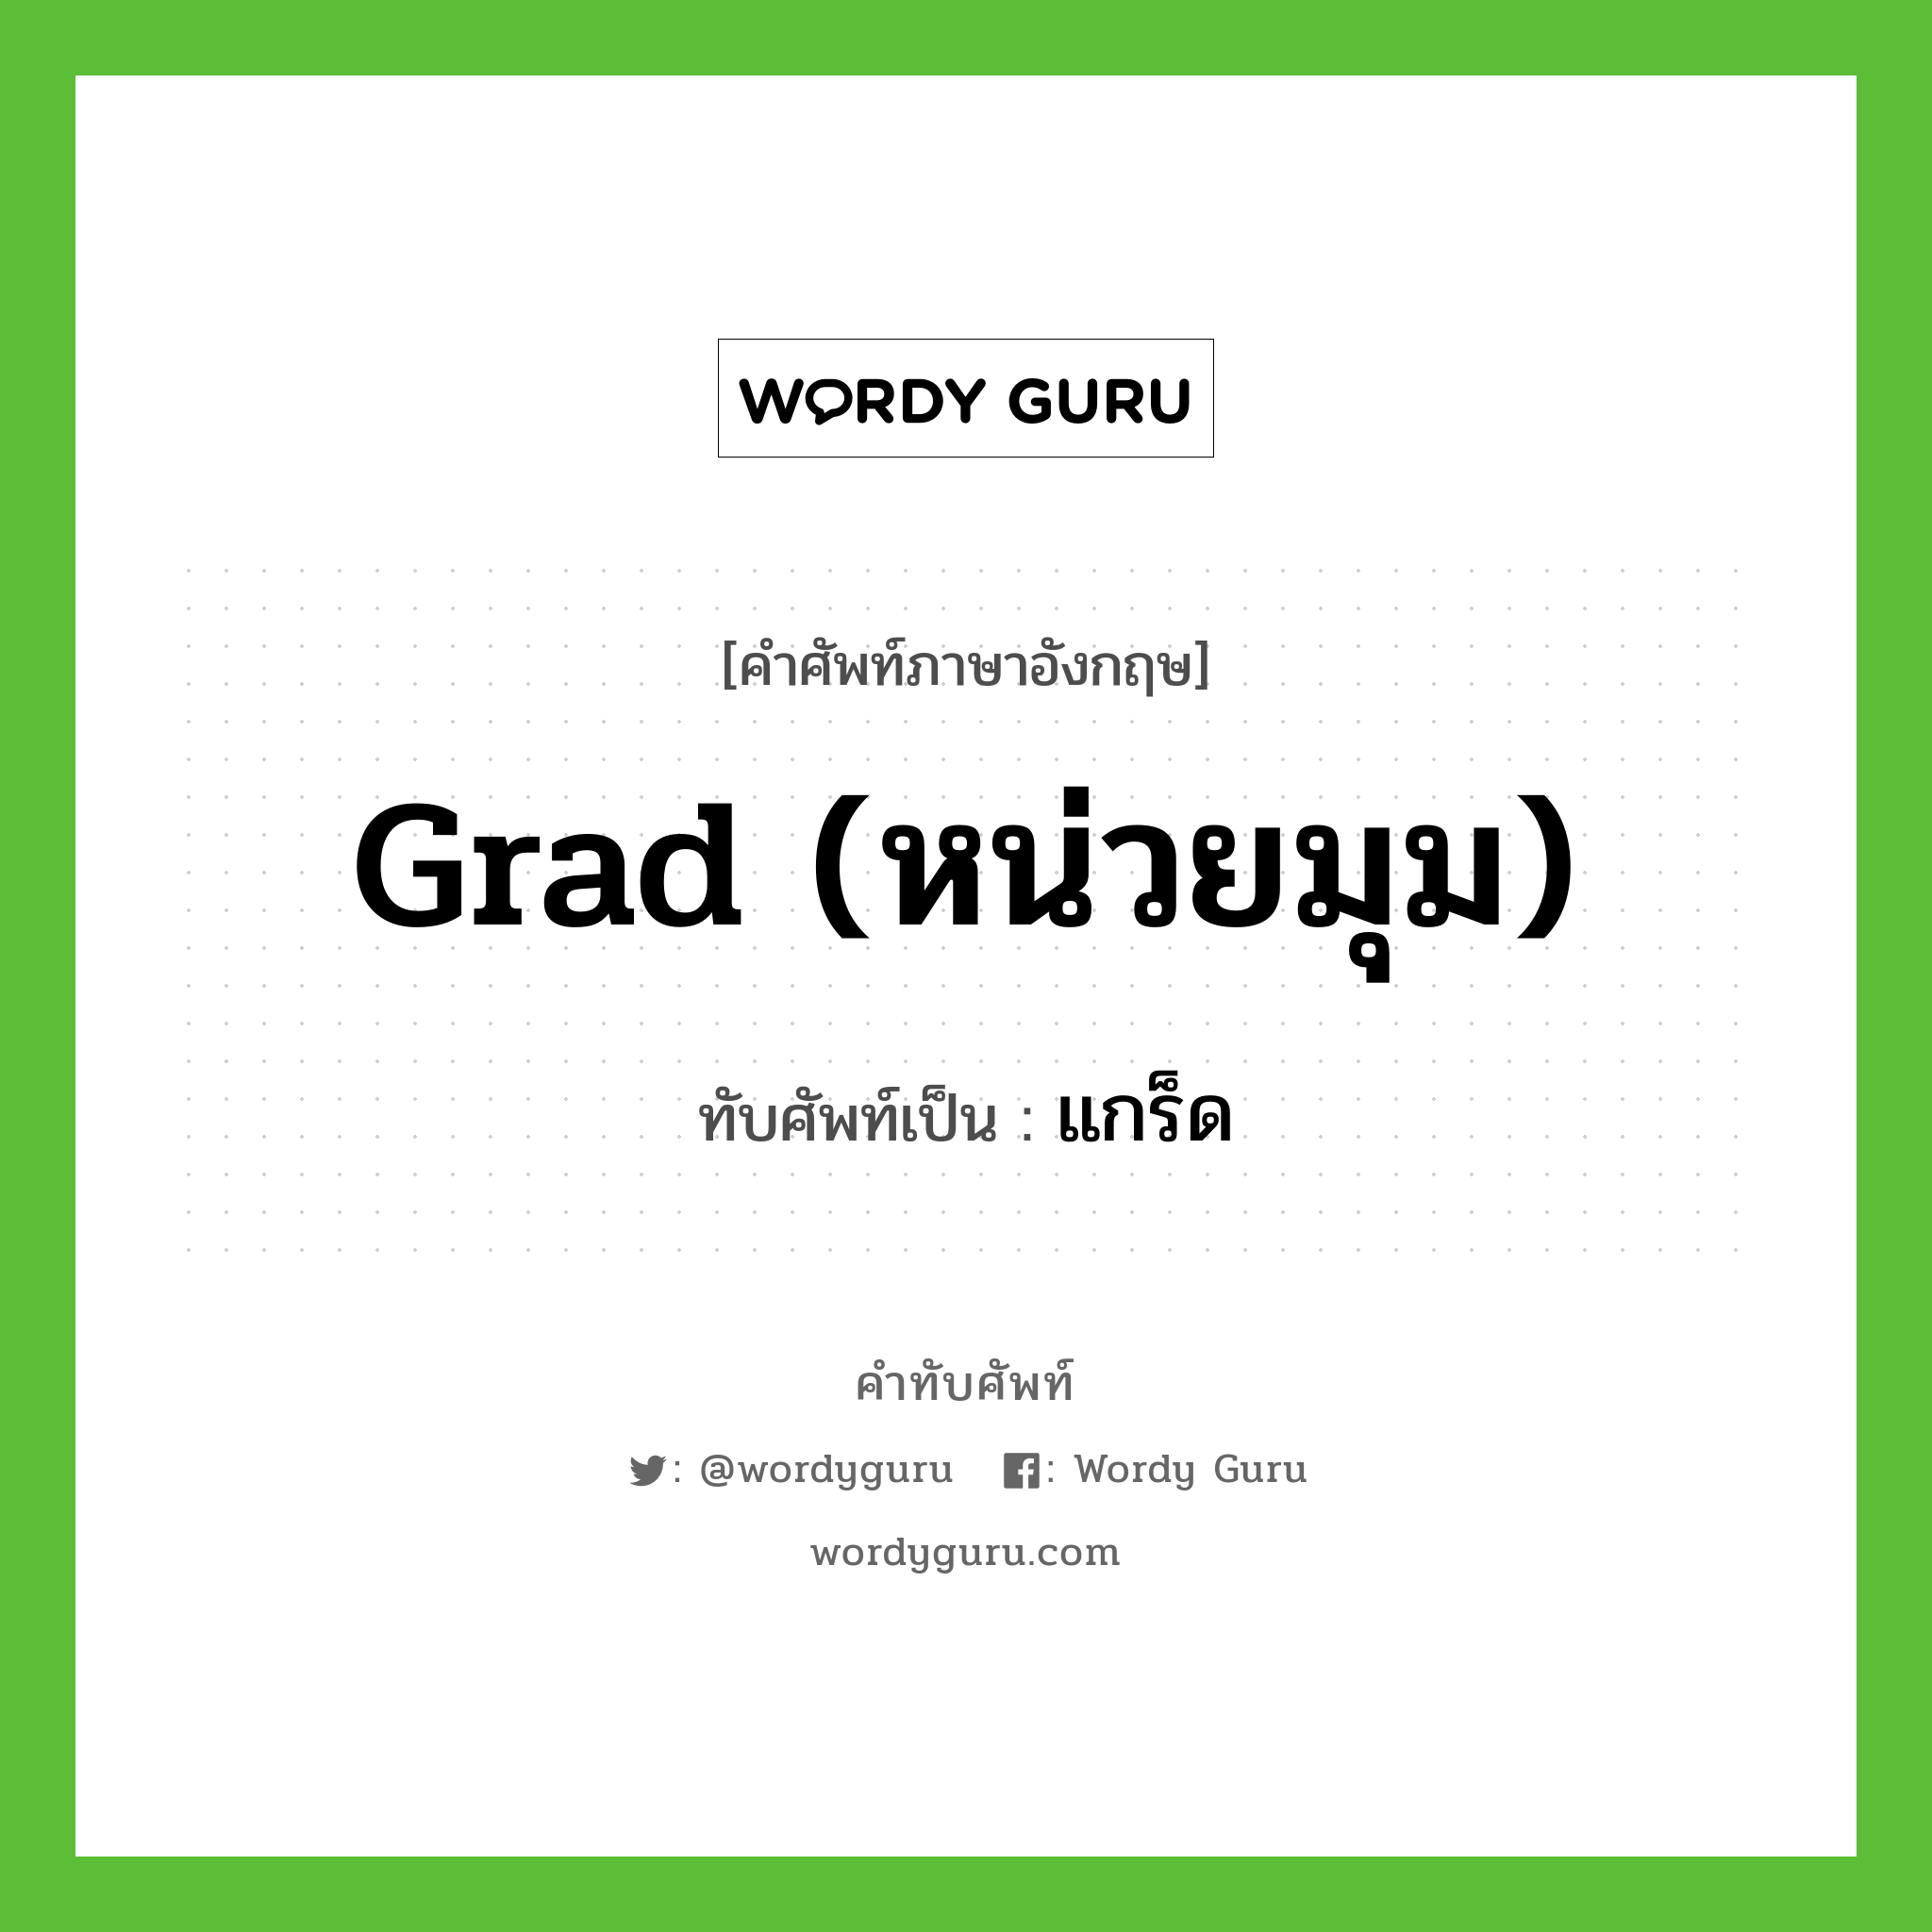 grad (หน่วยมุม) เขียนเป็นคำไทยว่าอะไร?, คำศัพท์ภาษาอังกฤษ grad (หน่วยมุม) ทับศัพท์เป็น แกร็ด